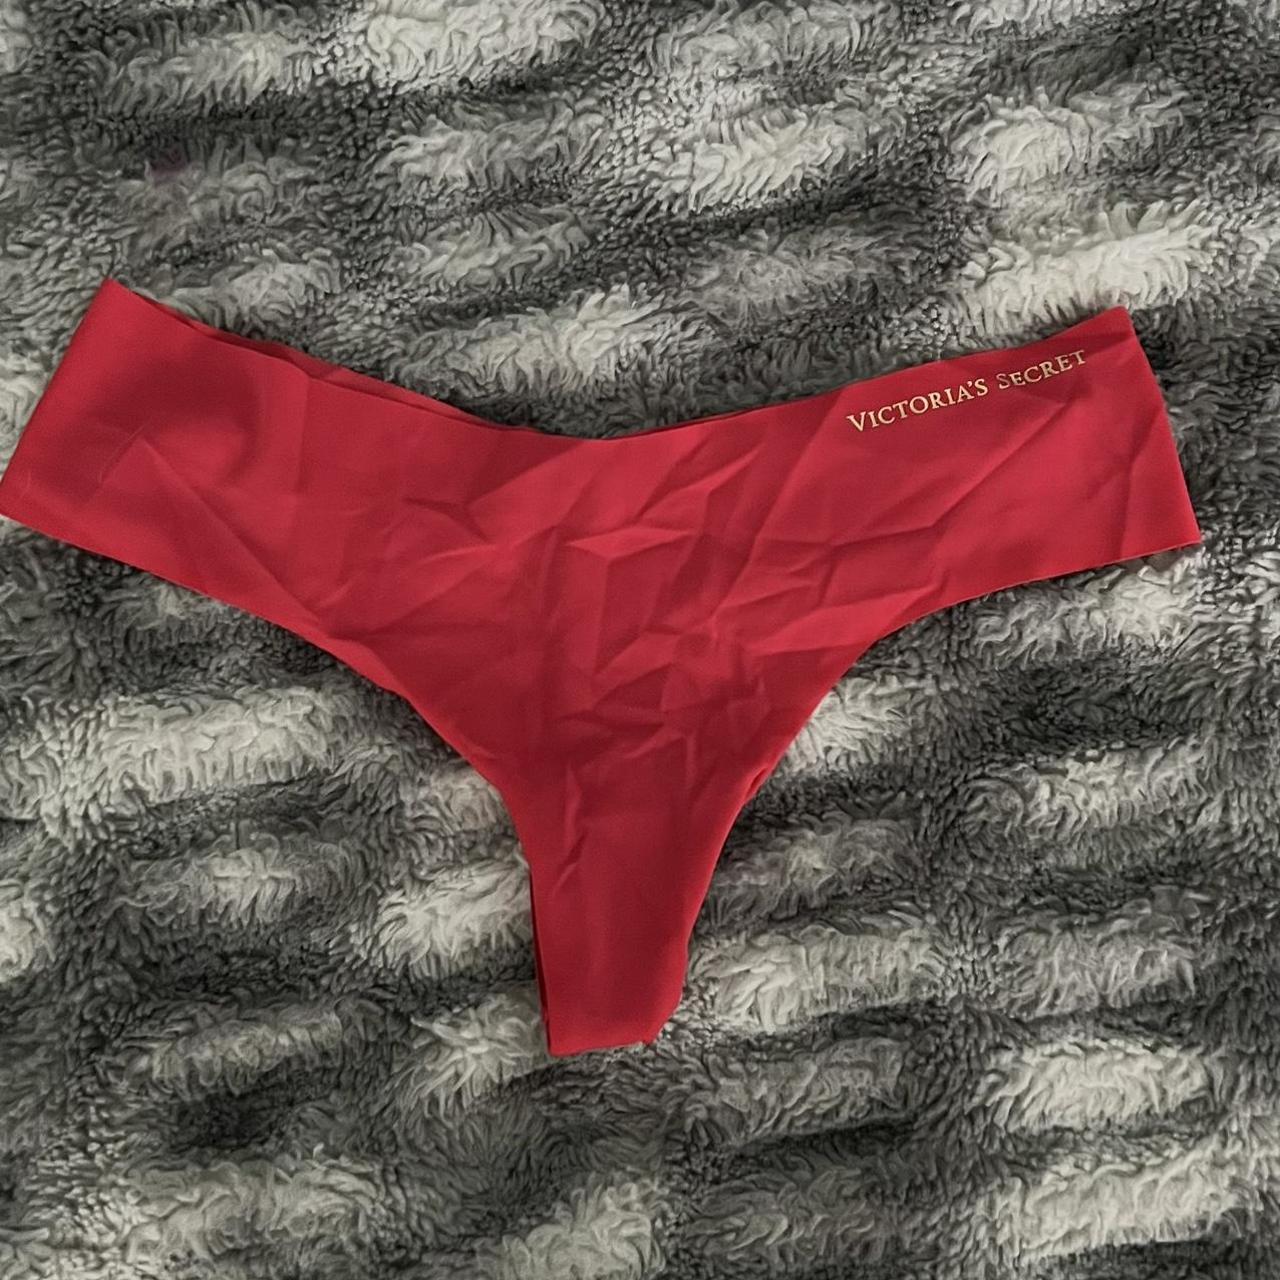 Victoria’s Secret XS red panties. Never worn but